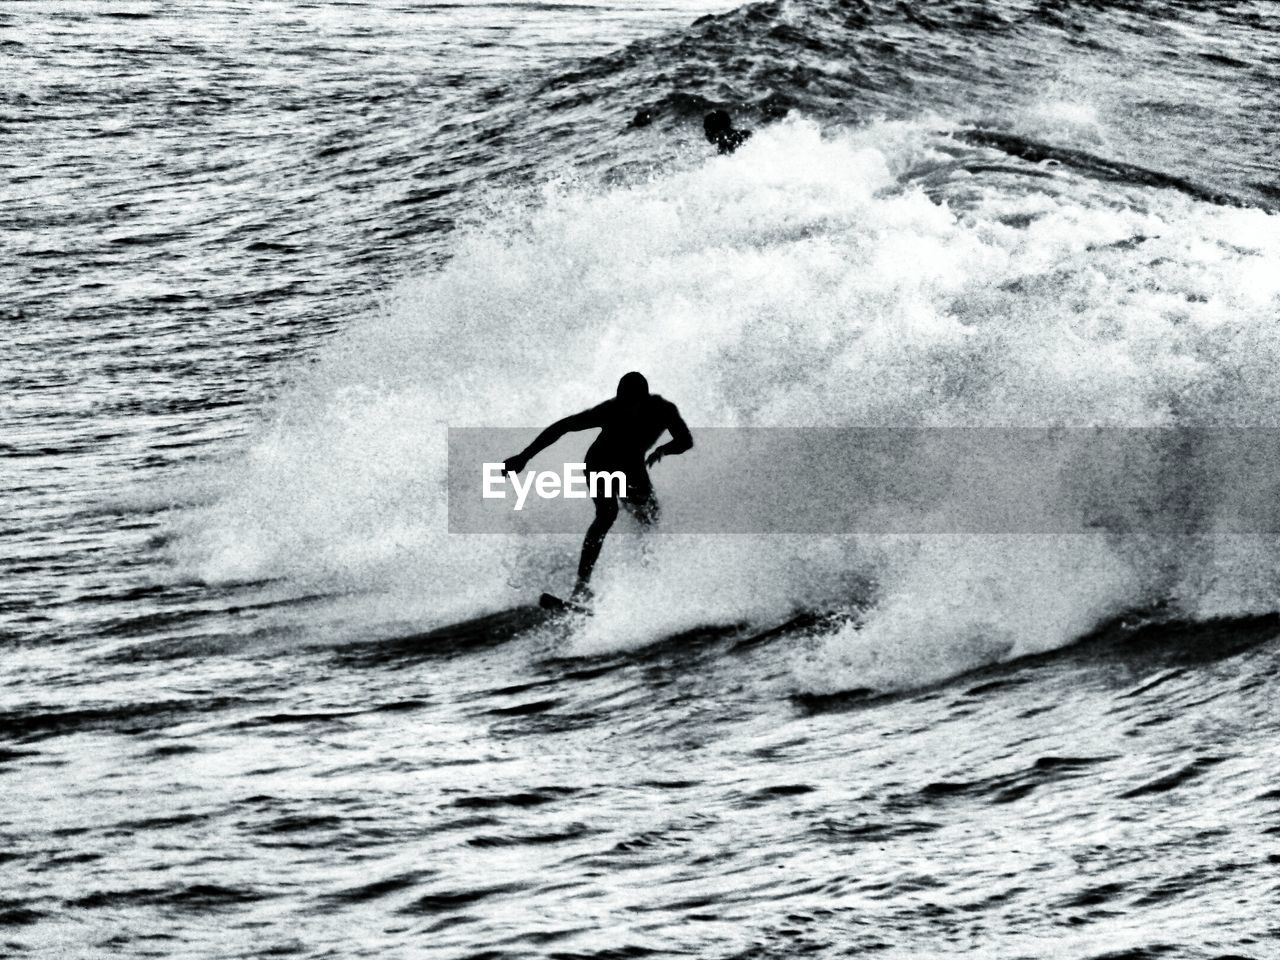 Silhouette surfer surfing in sea